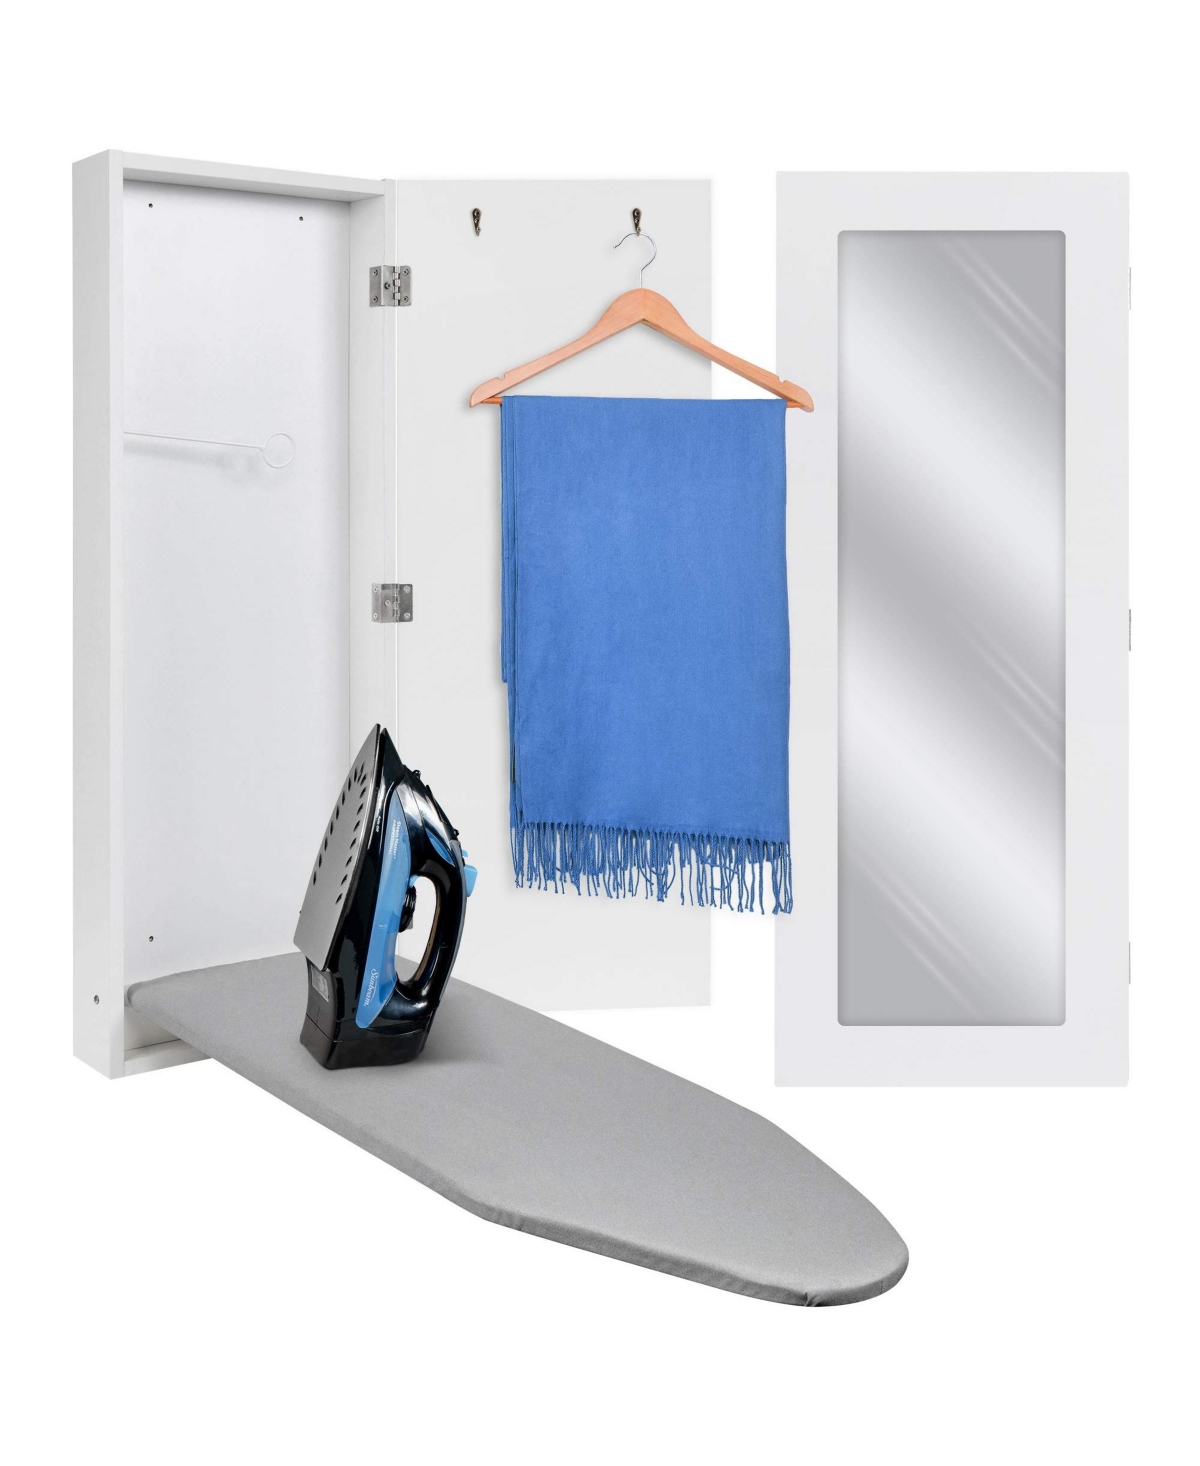 Ironing Board with Mirror, Wall Mounted Ironing Board Holder - Walnut